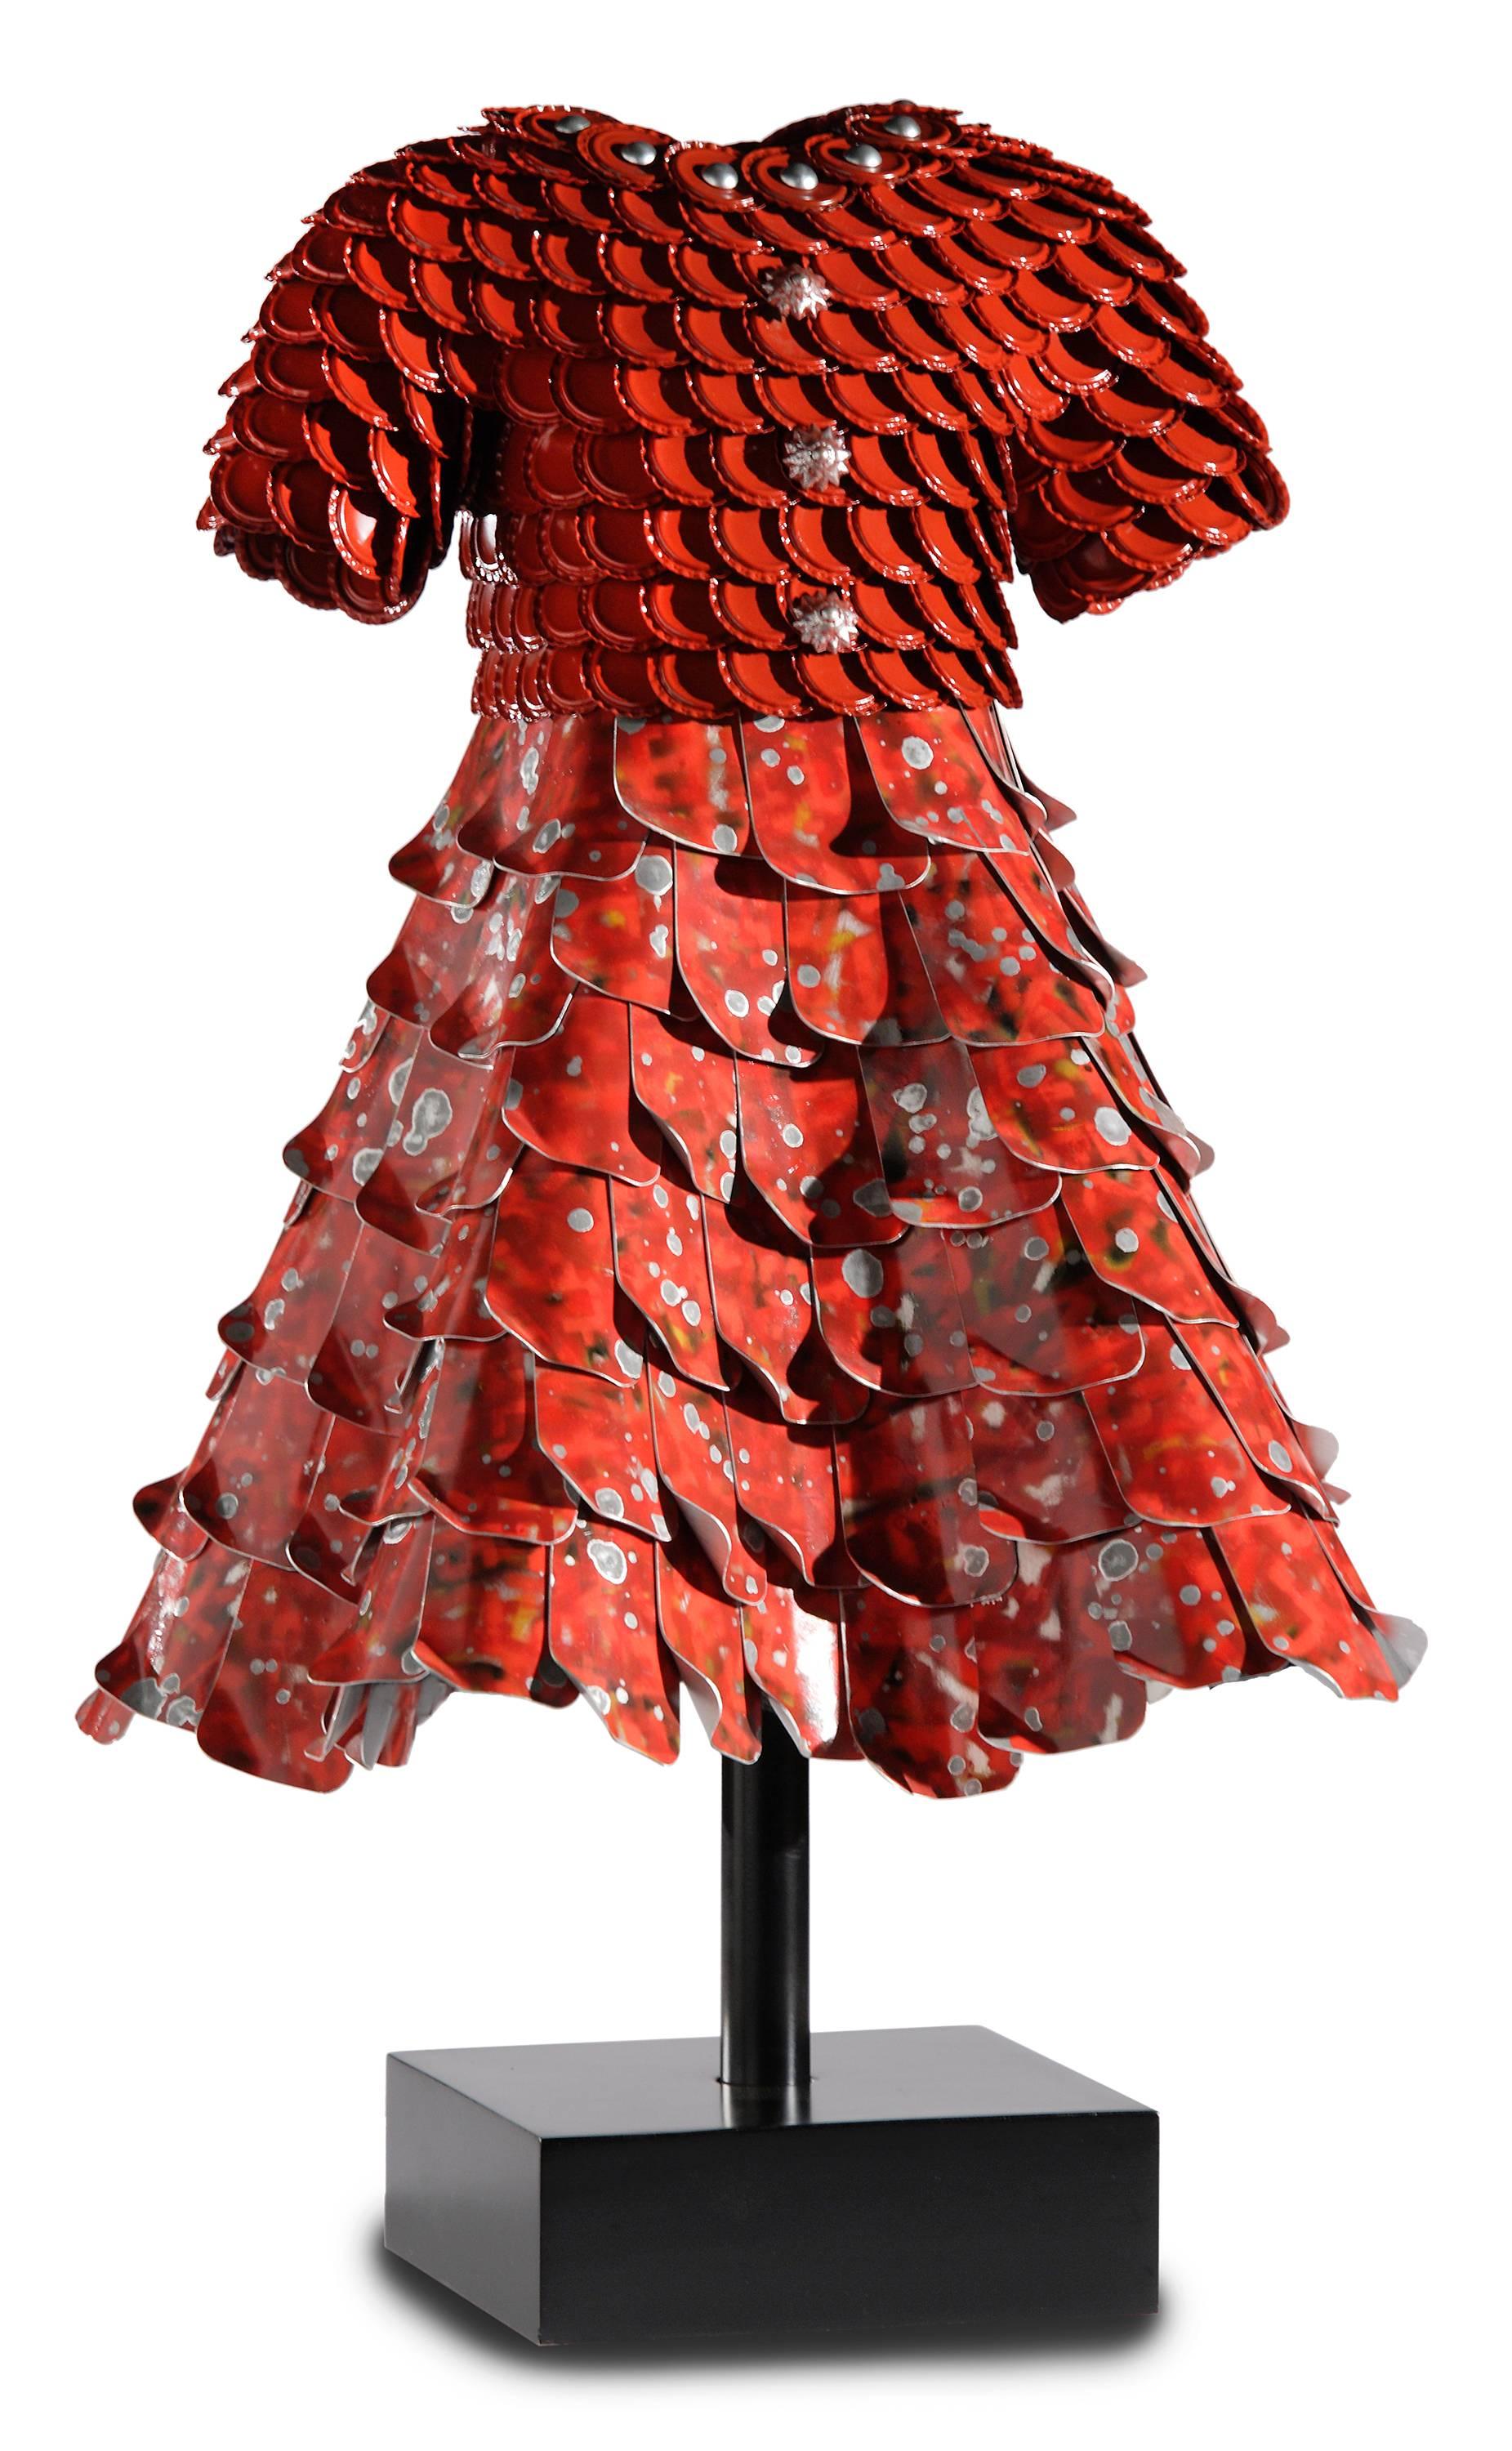 John Petrey Figurative Sculpture - 'Susan' Mixed Media, Found Object Sculpture of a Red Dress